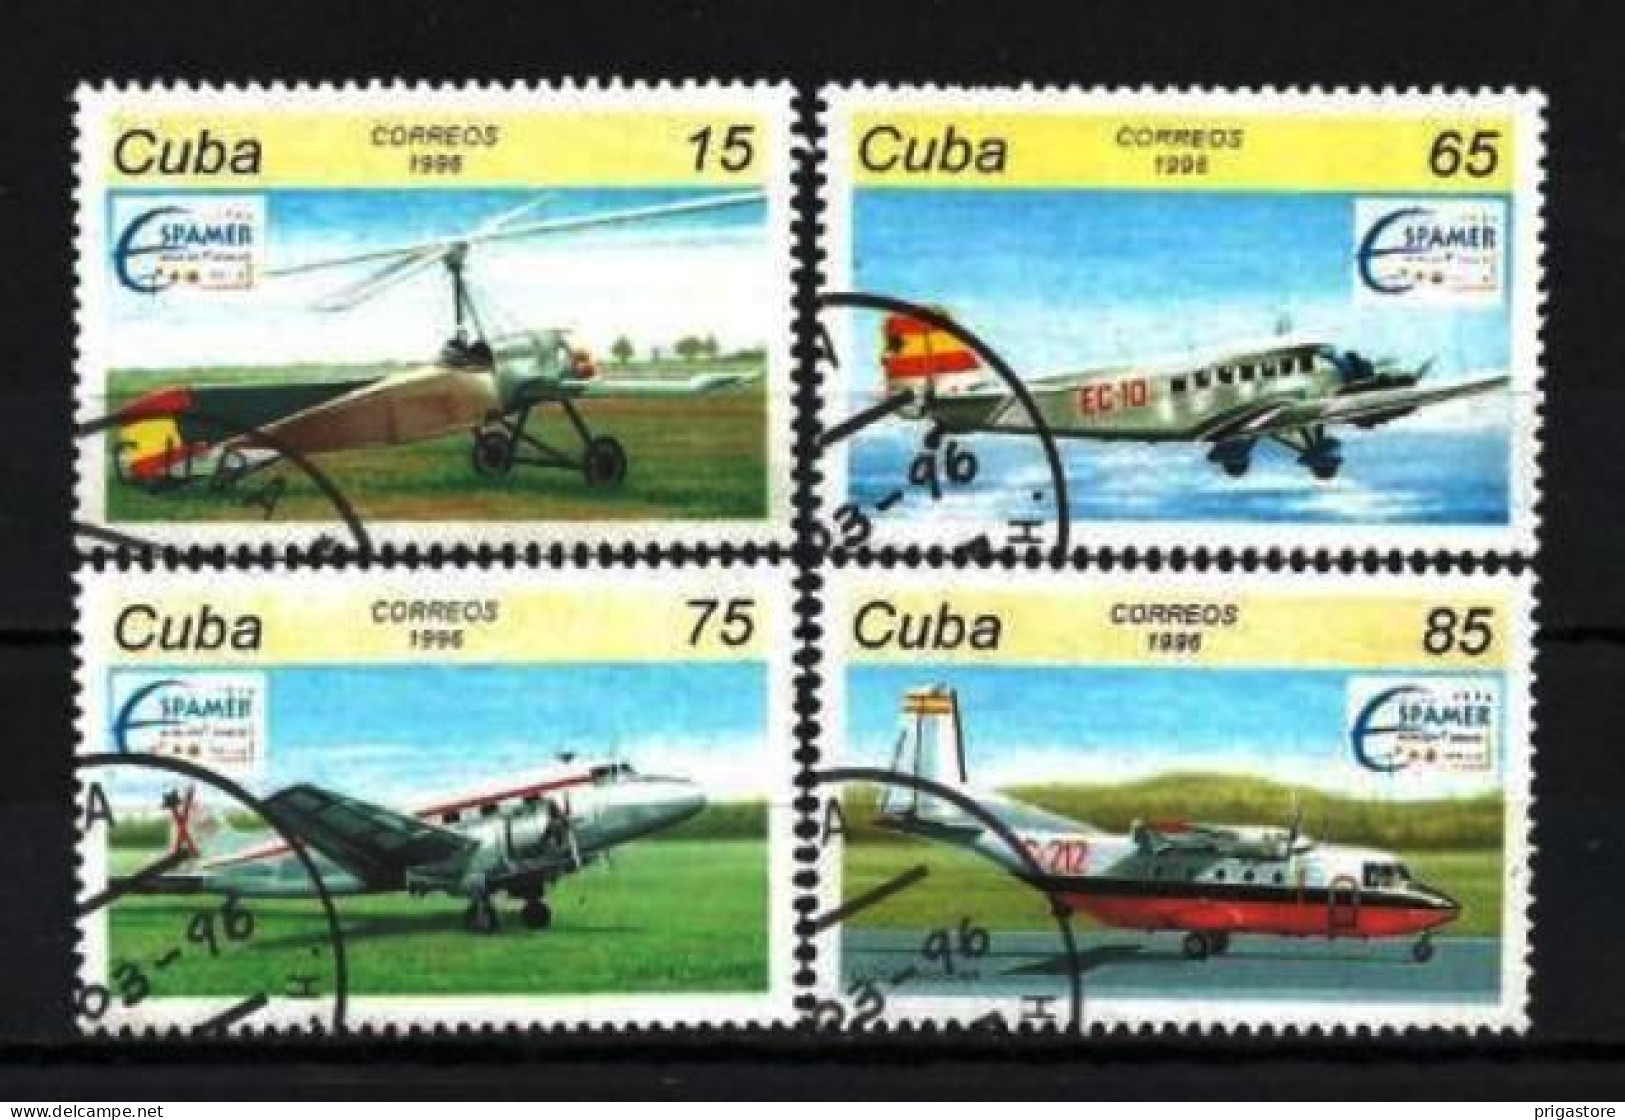 Cuba 1996 Avions (28) Yvert N° 3520 à 3523 Oblitéré Used - Used Stamps